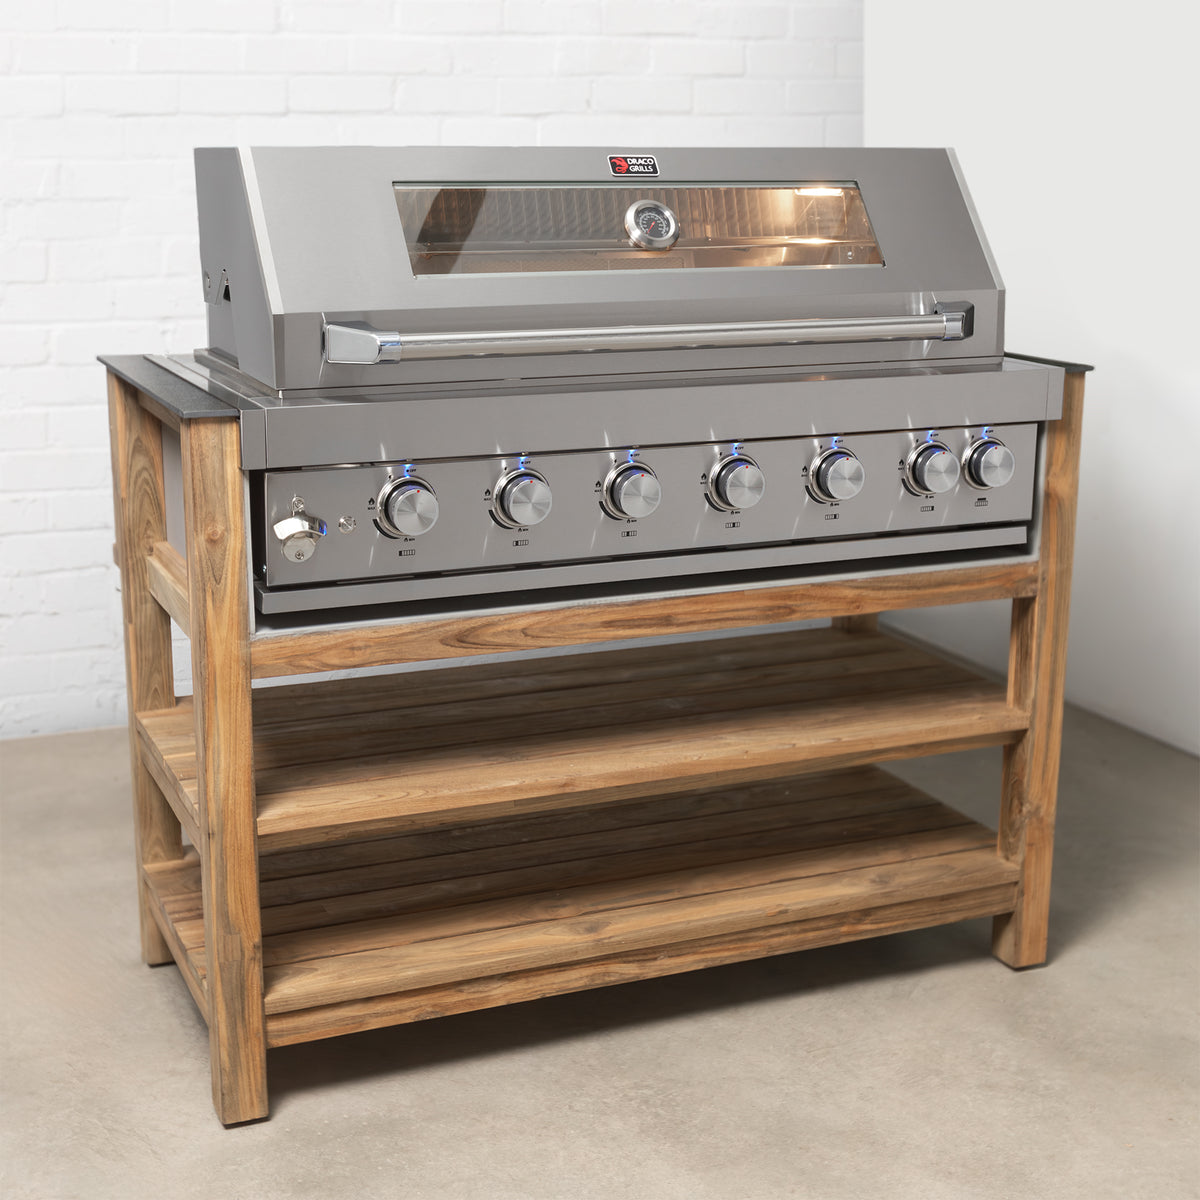 Draco Grills Teak 6 Burner Outdoor Kitchen with Modular Double Fridge, Single Cupboard, Sink